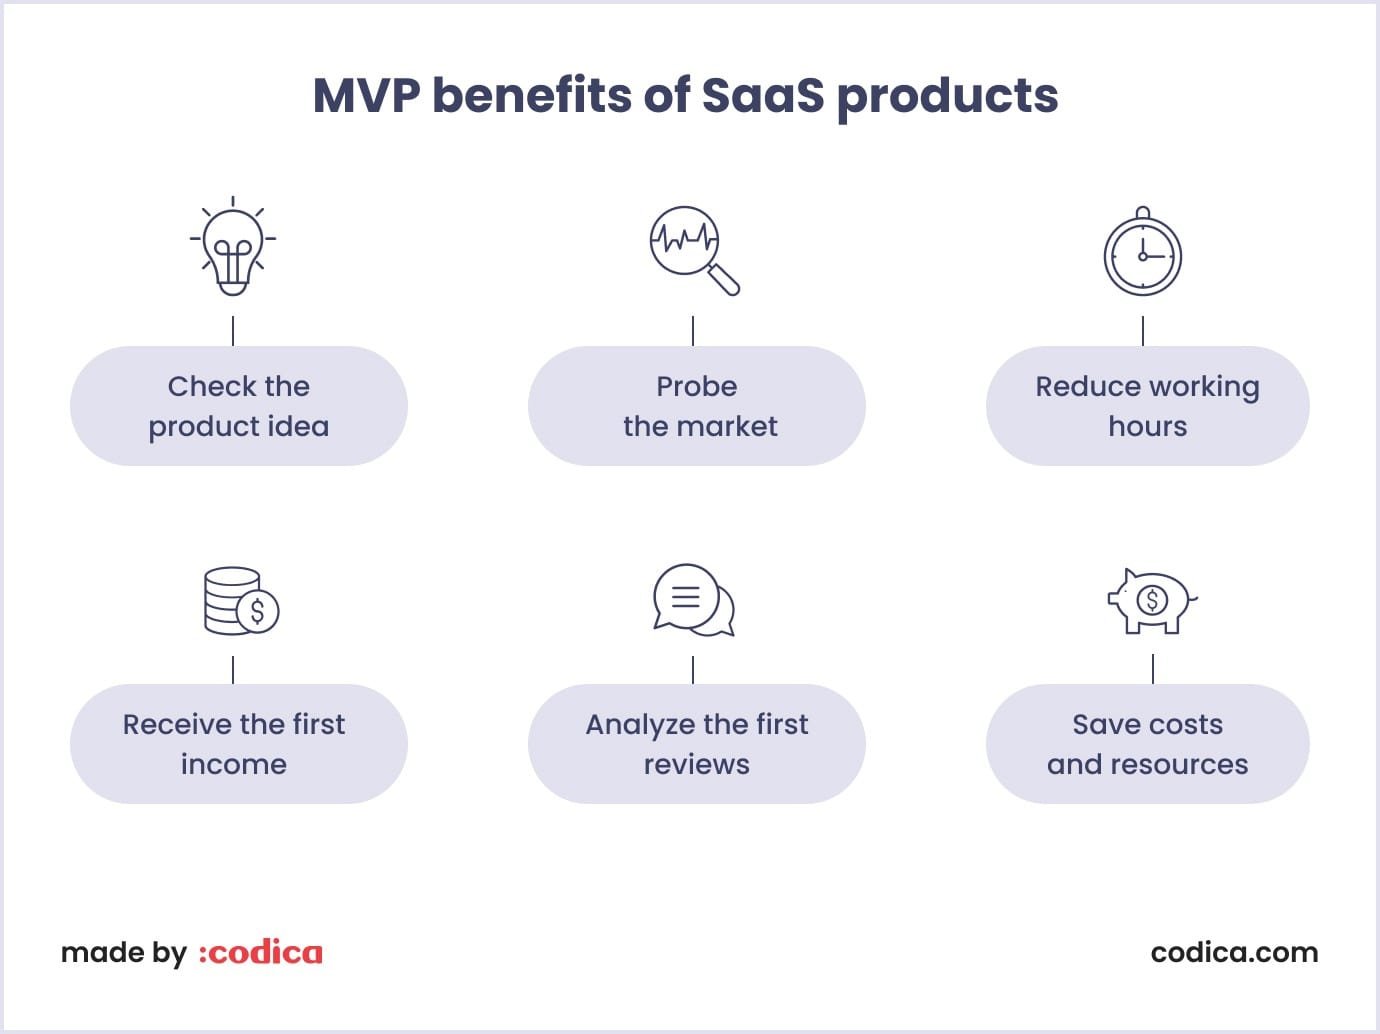 Main MVP benefits for SaaS